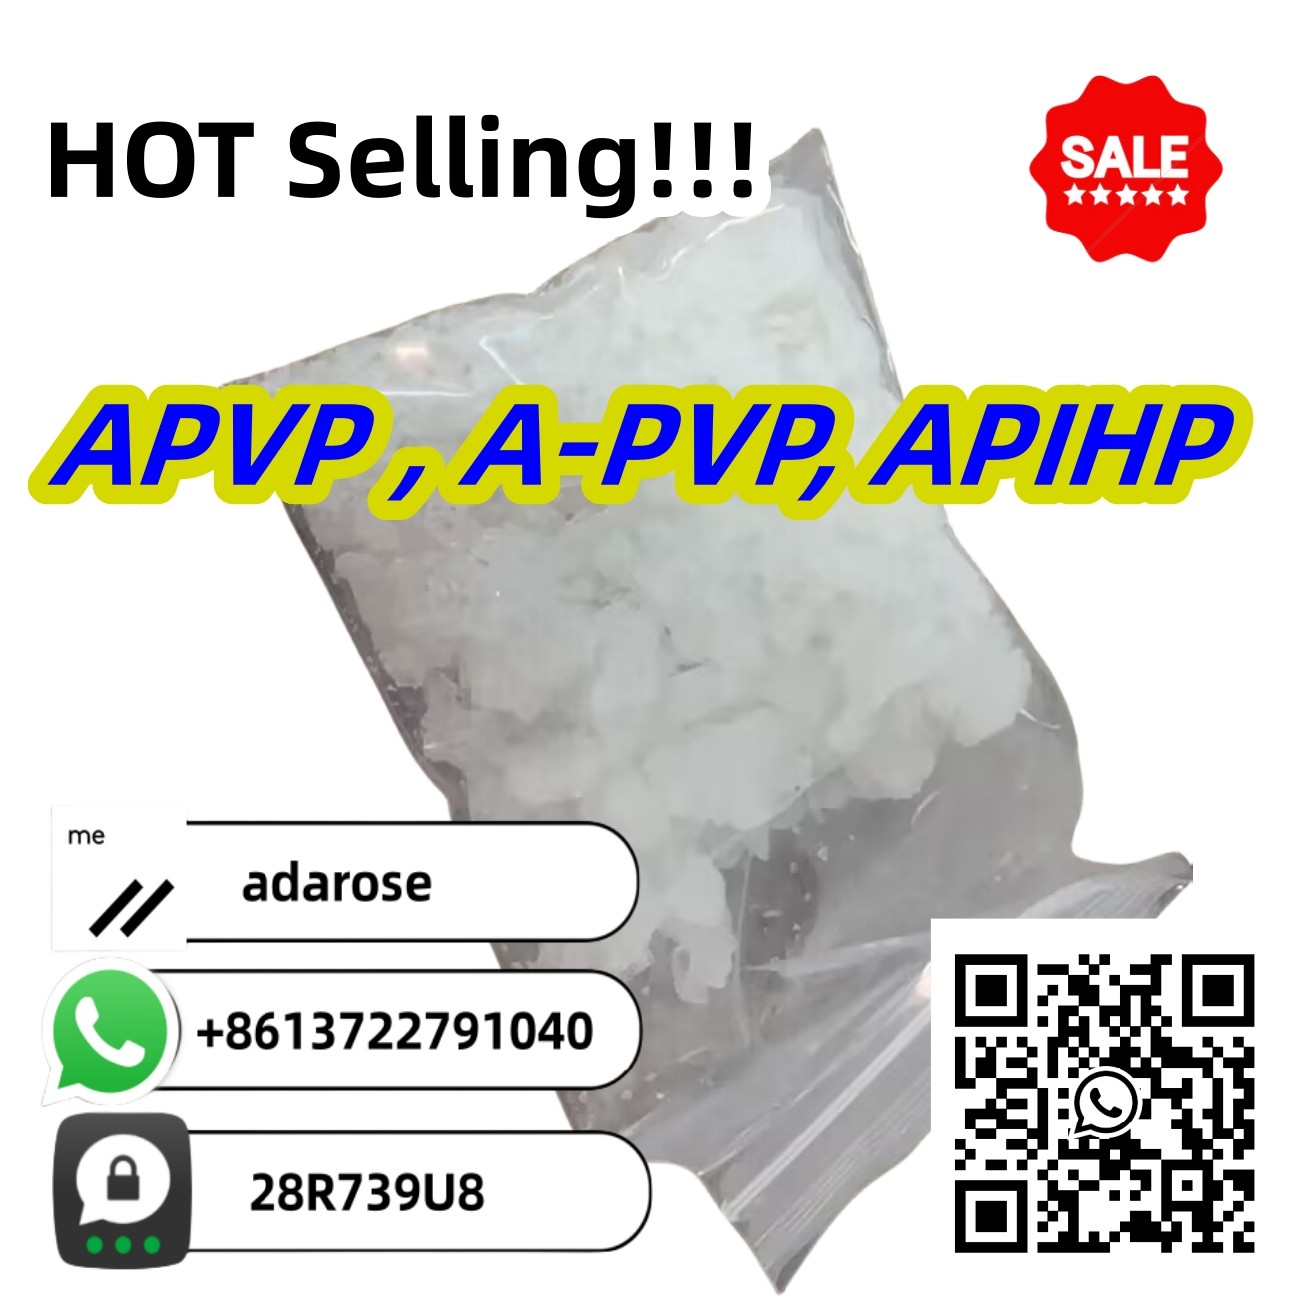 Good quality APV/P, A-PVP, APIHP-image